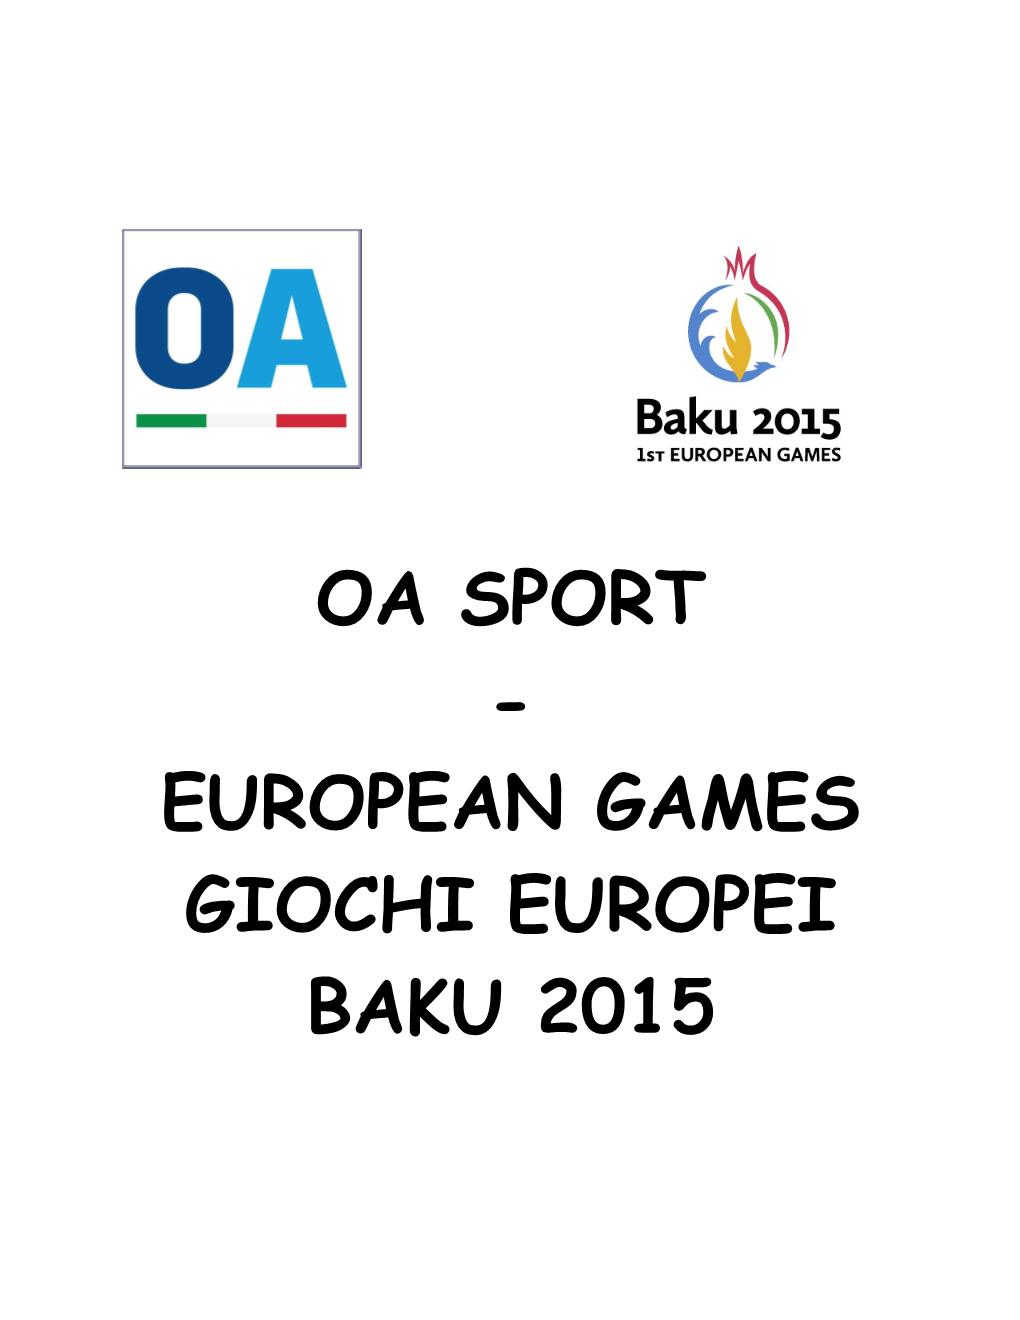 European Games Giochi Europei Baku 2015 Arco